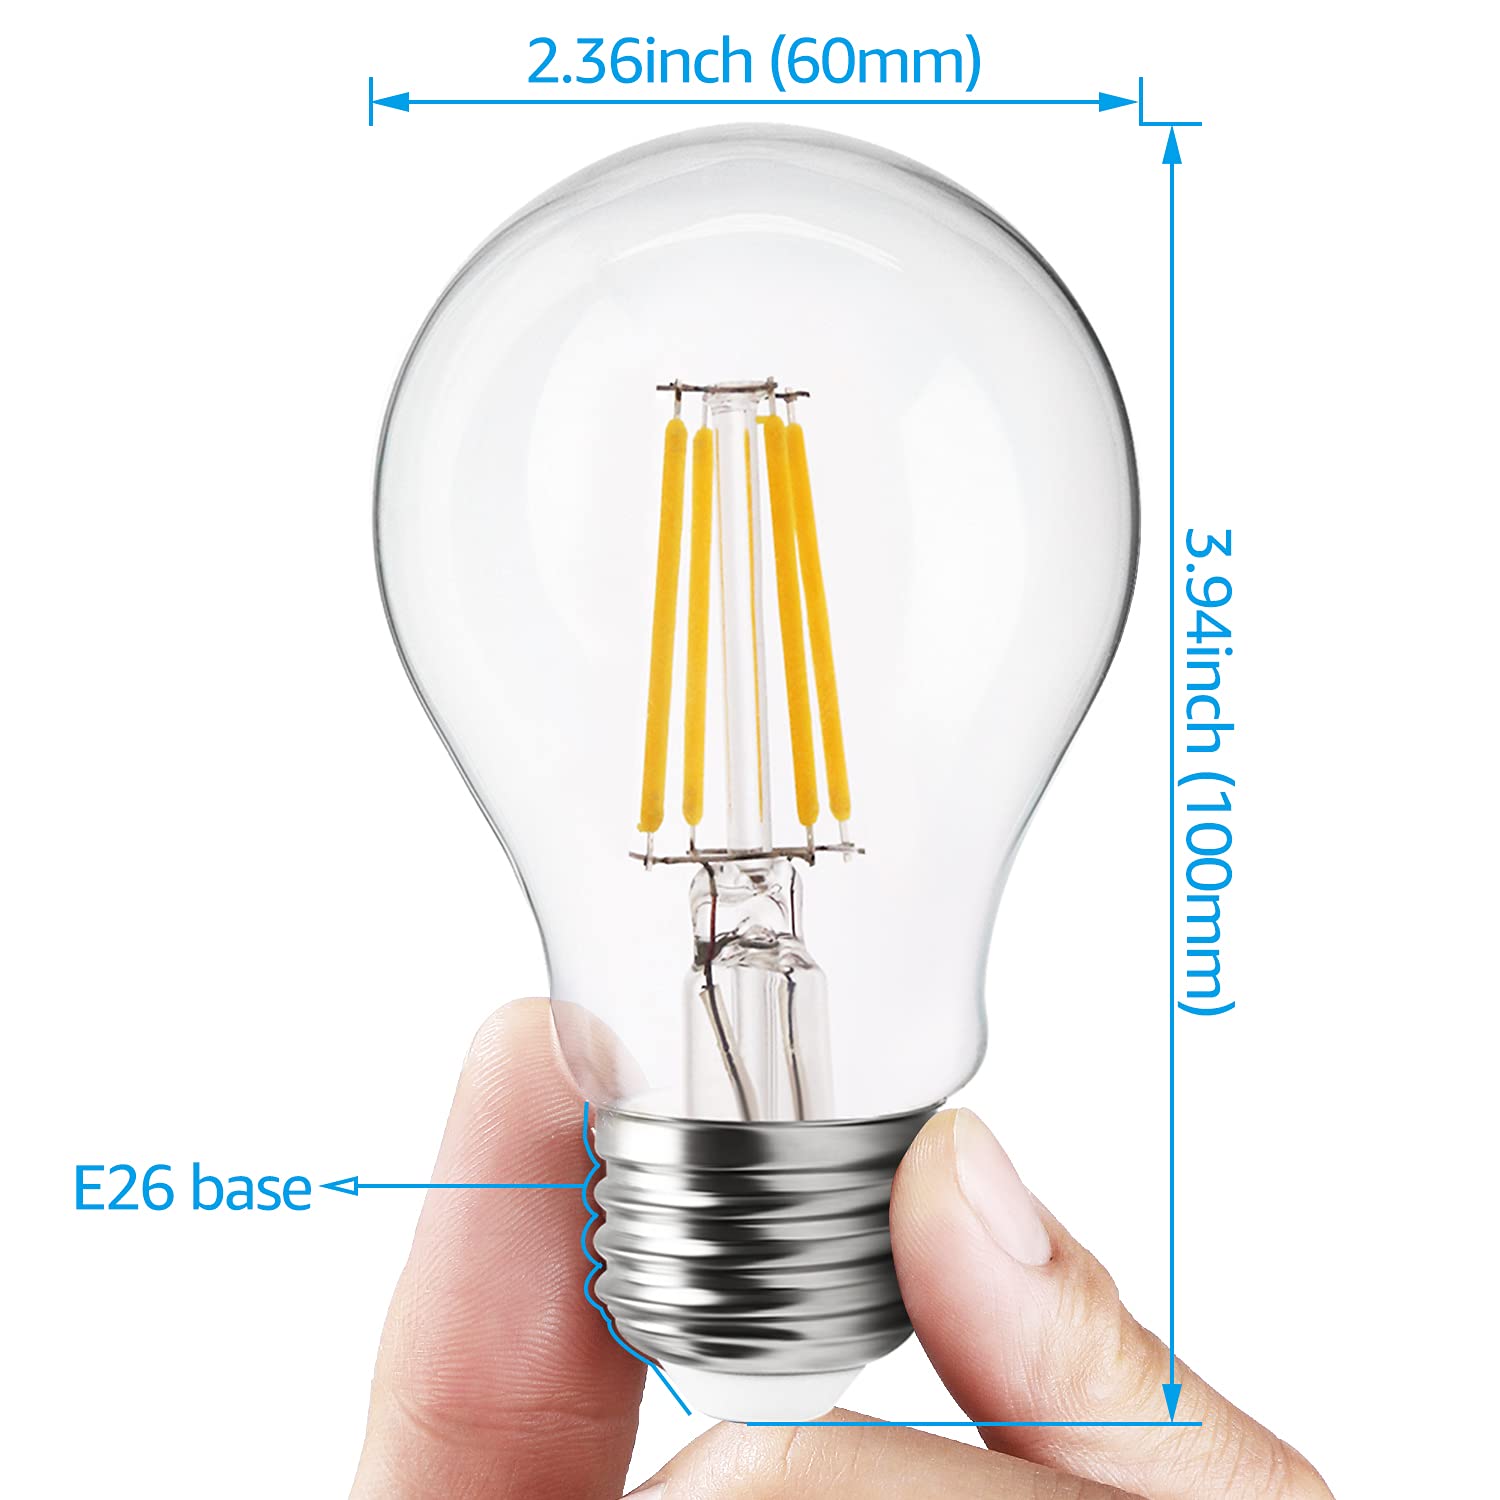 Classic 4.5W A19 LED Vintage Bulbs - E26 Base - 2700K Soft White